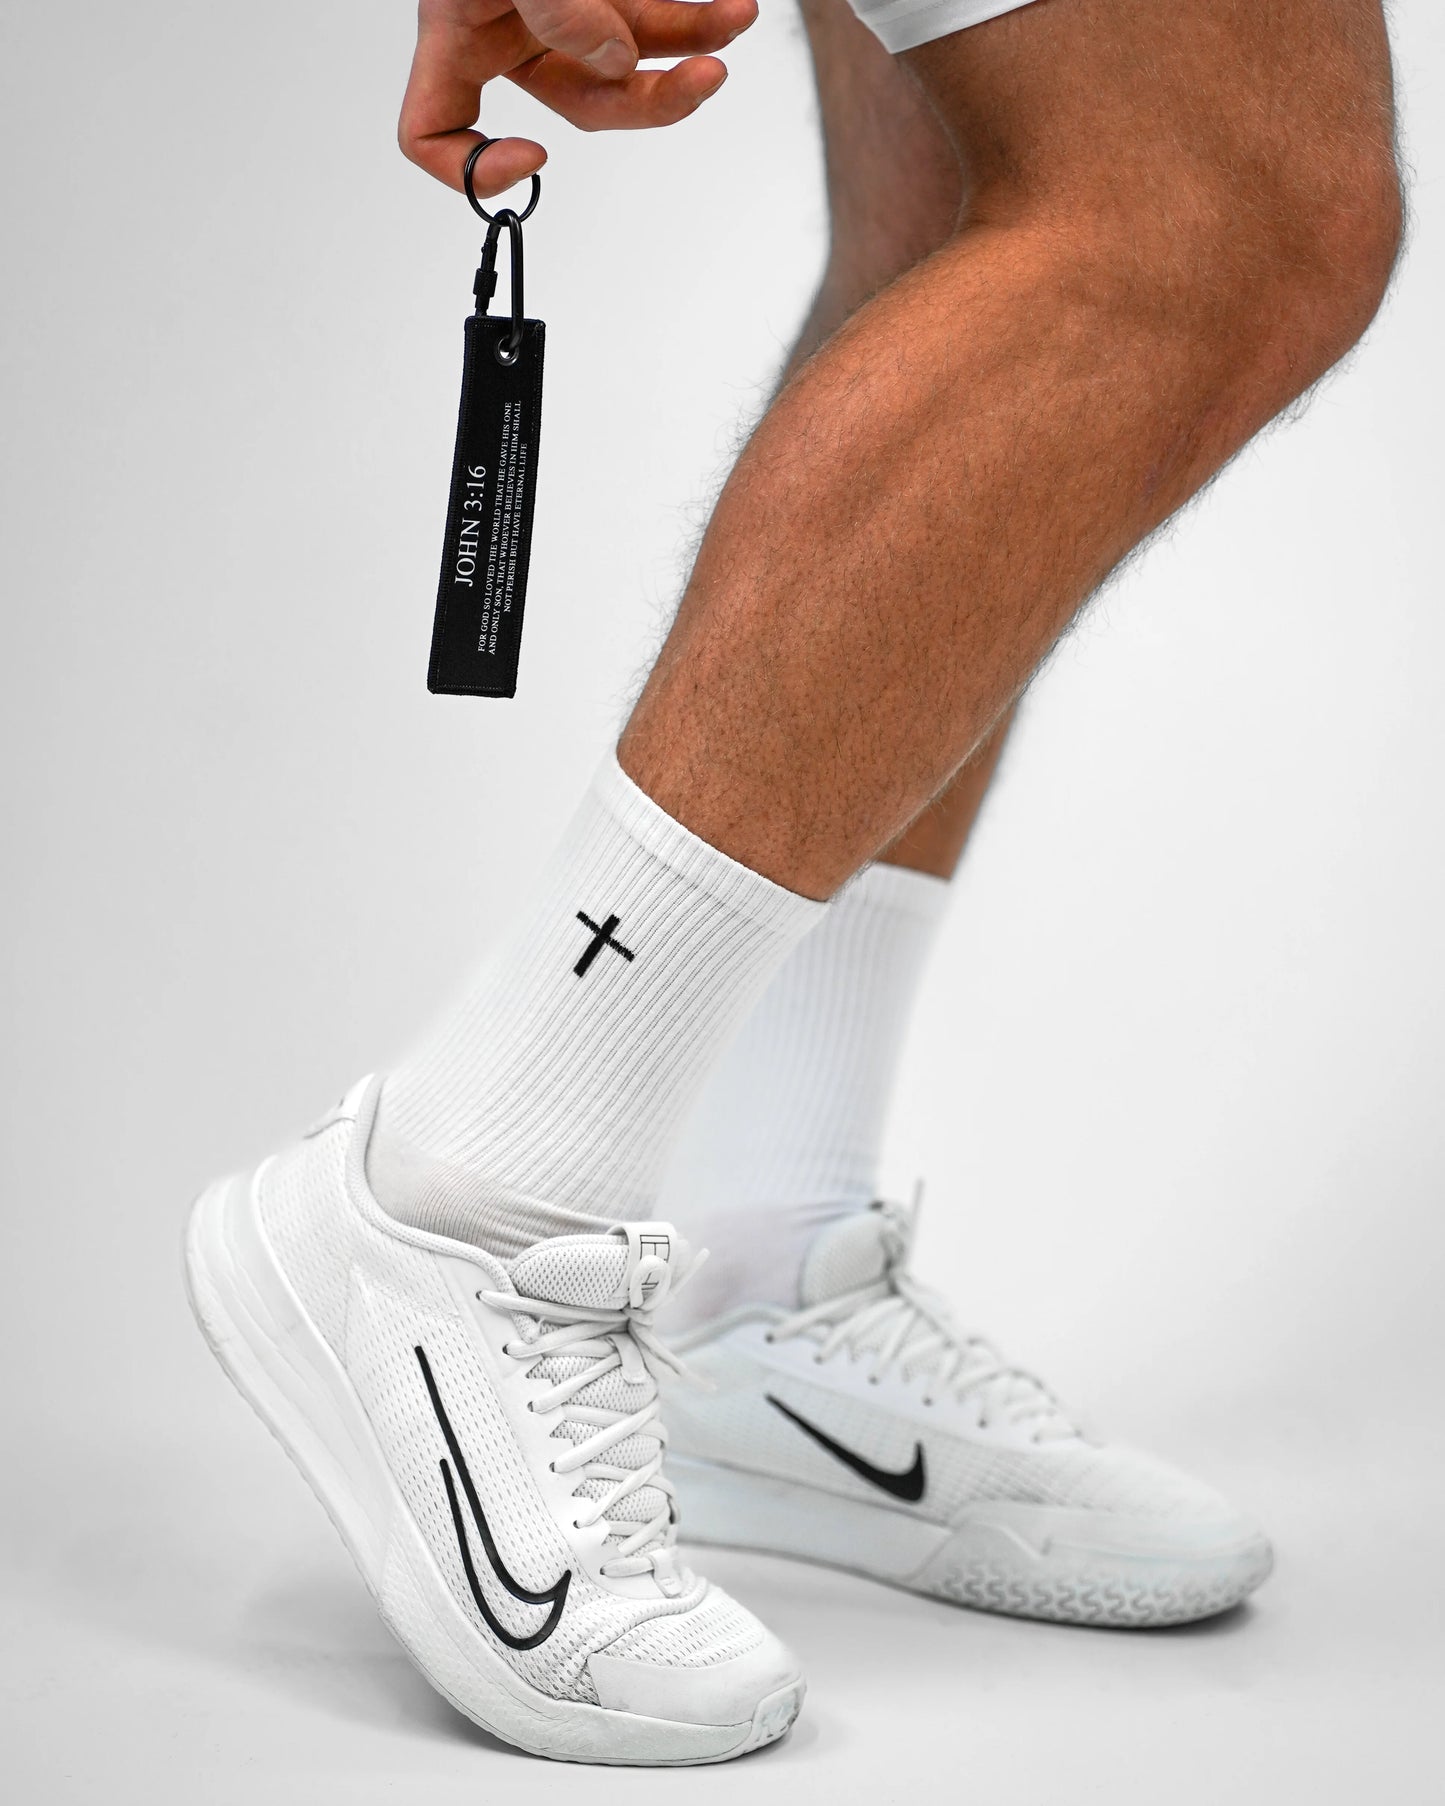 Christian Performance Socken + Schlüsselanhänger